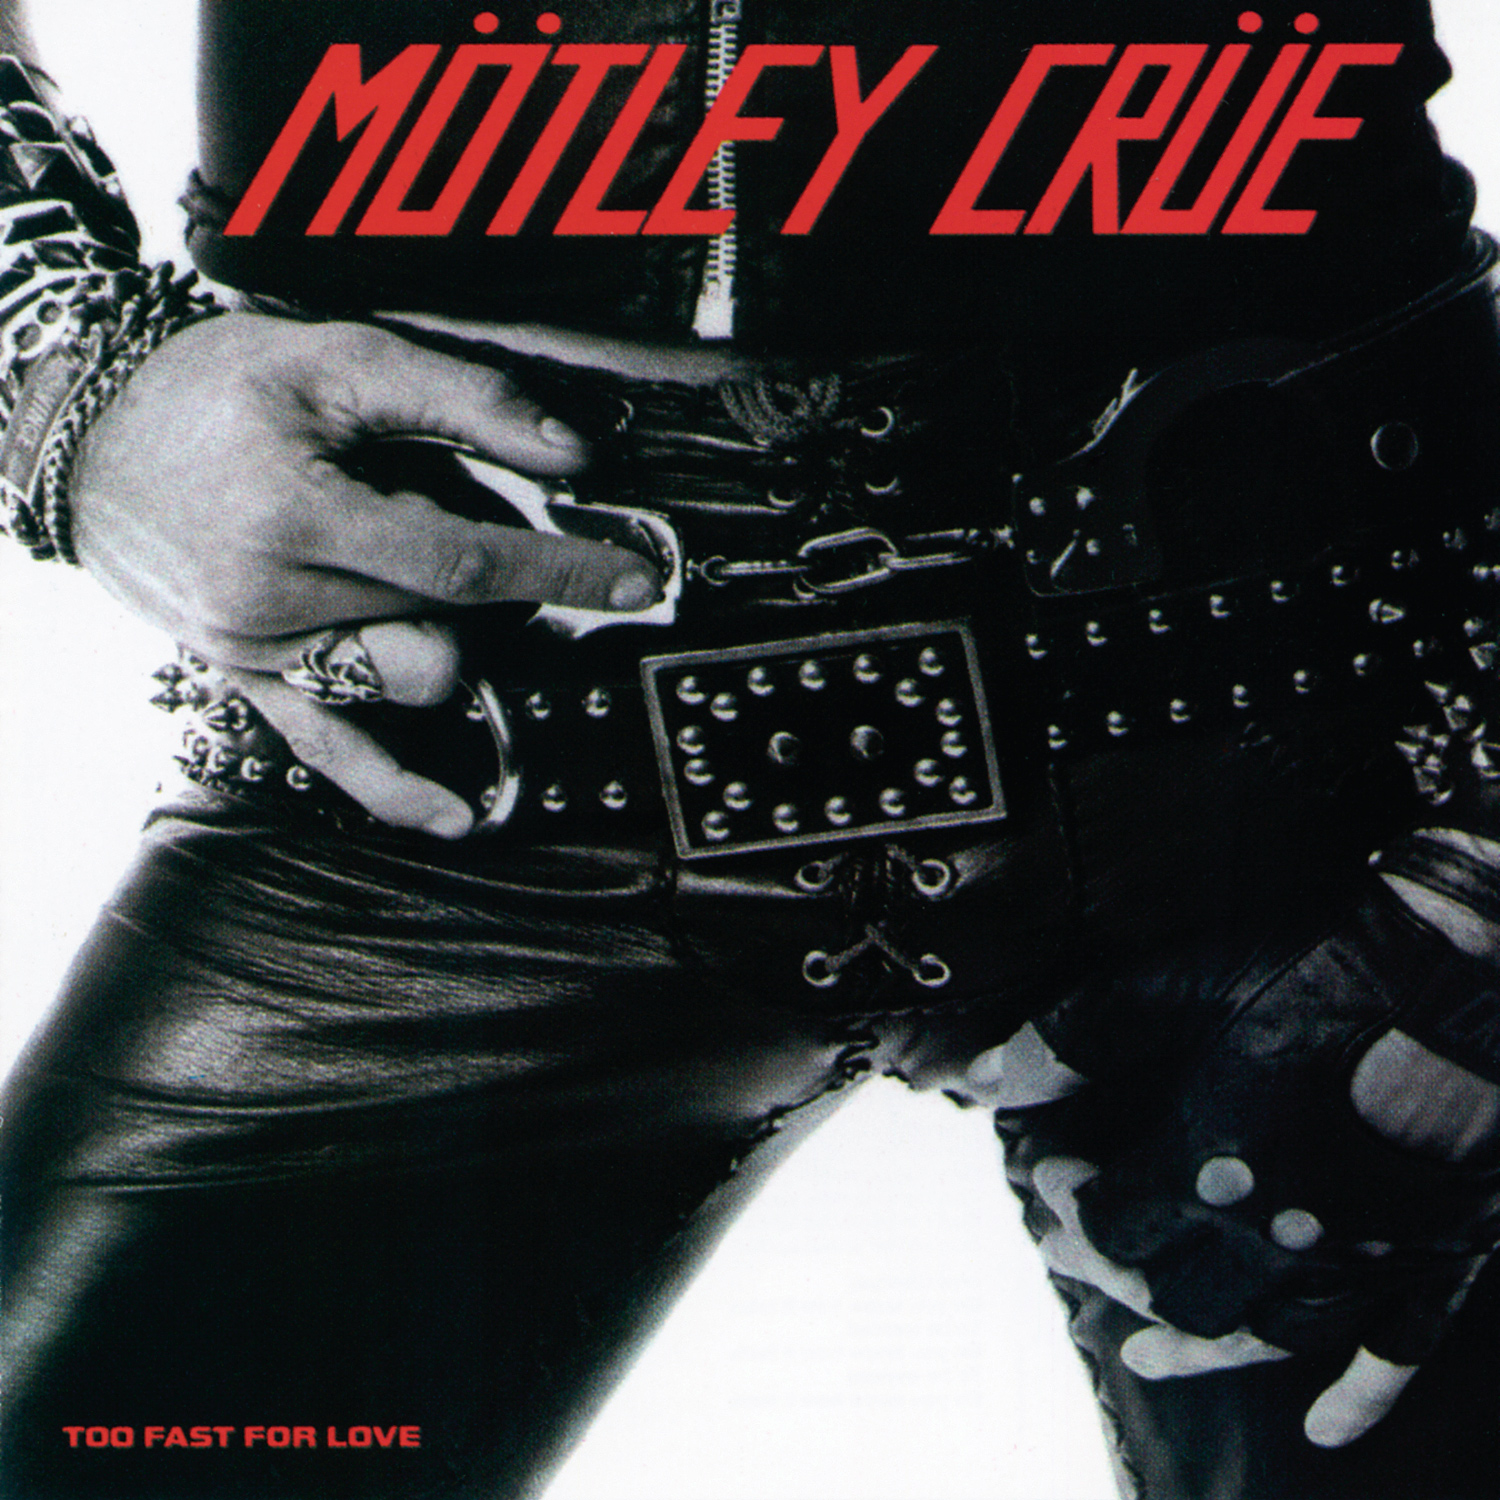 Motley Crue - Too Fast For Love (1981/2008/2018) [HDTracks FLAC 24bit/96kHz]